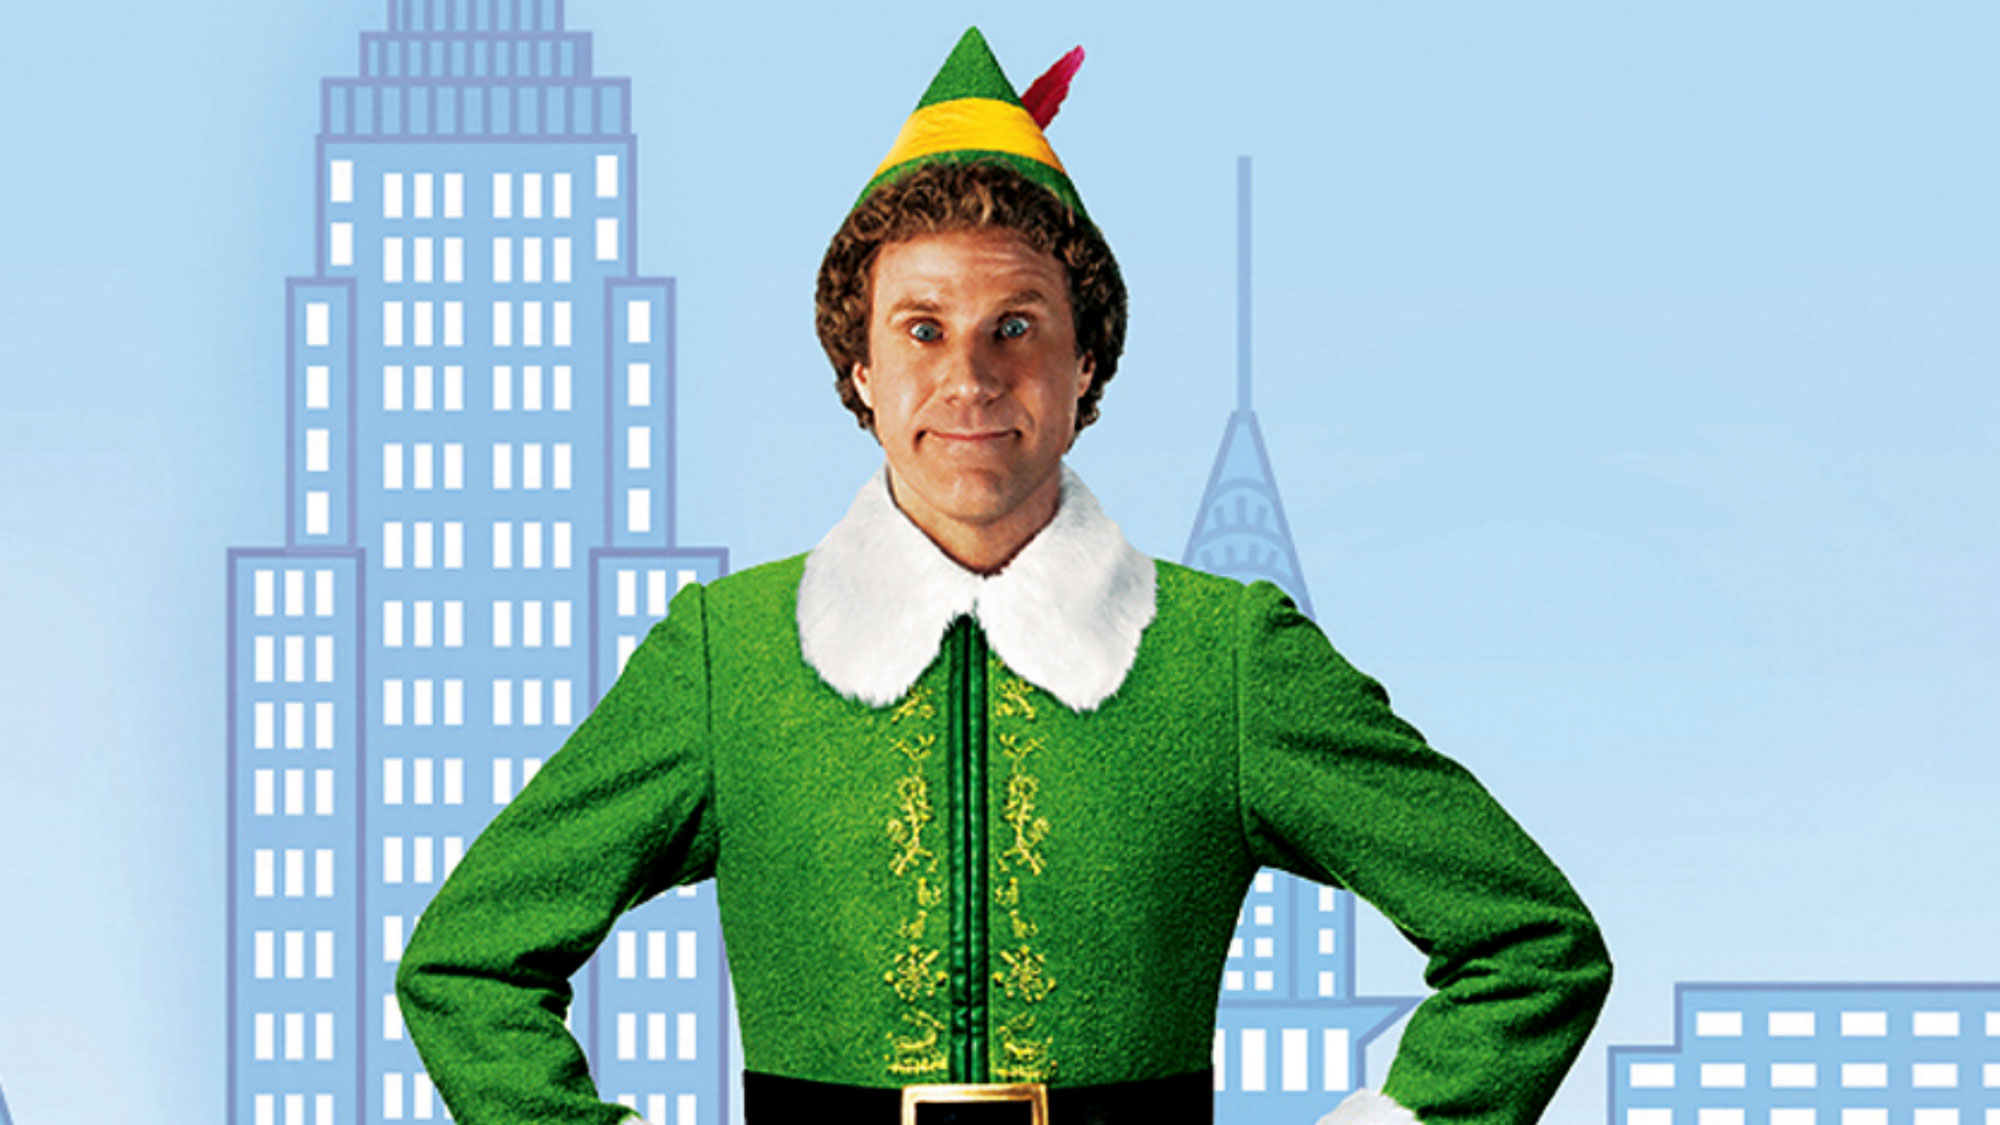 Will Ferrell in Elf